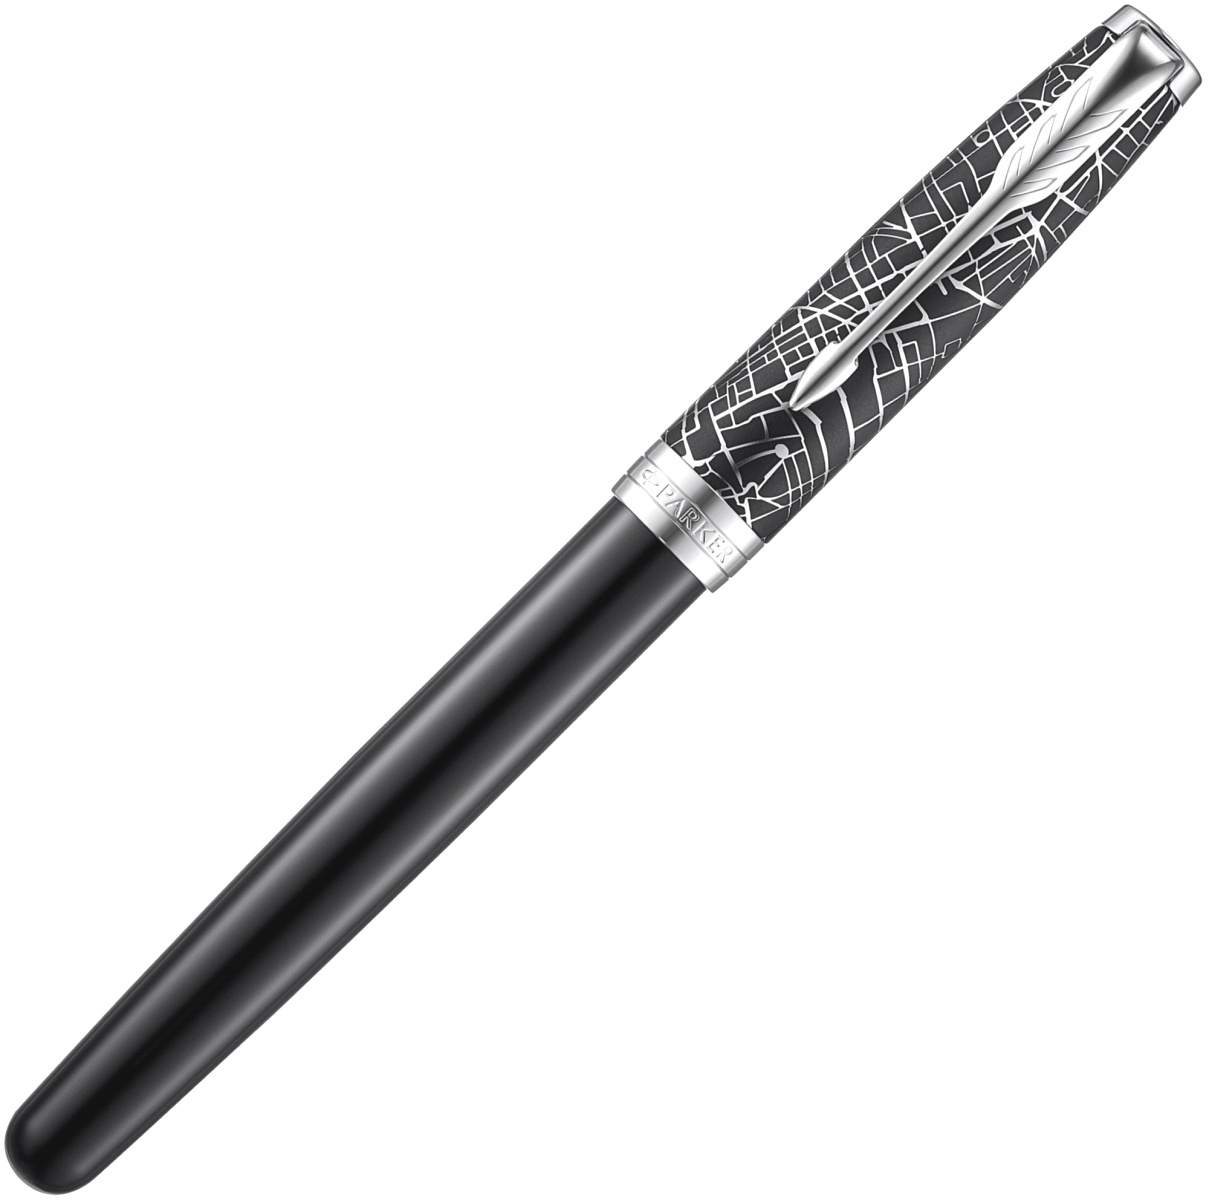  Перьевая ручка Parker Sonnet Metro SE18 F541, Black CT (Перо F), фото 2